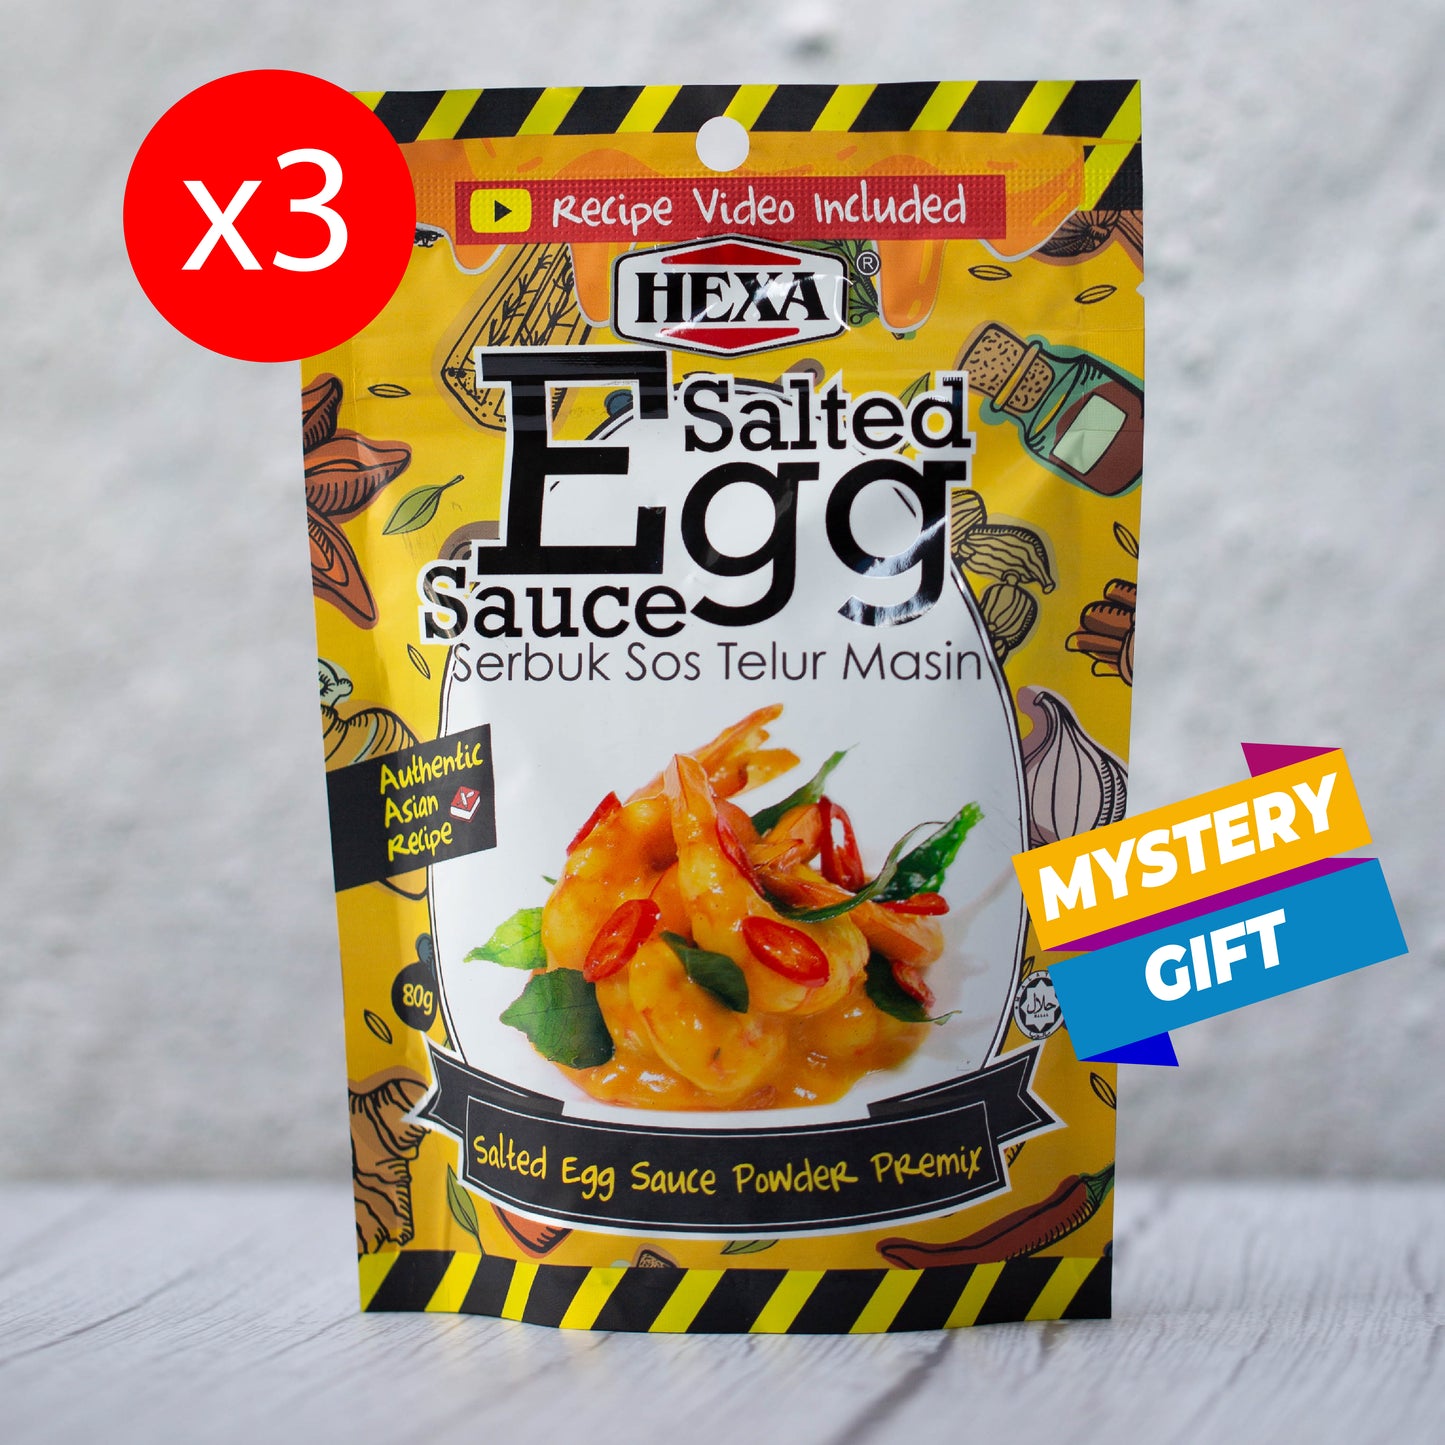 HEXA Salted Egg Sauce Powder Premix 80gm*3 + Free Gift